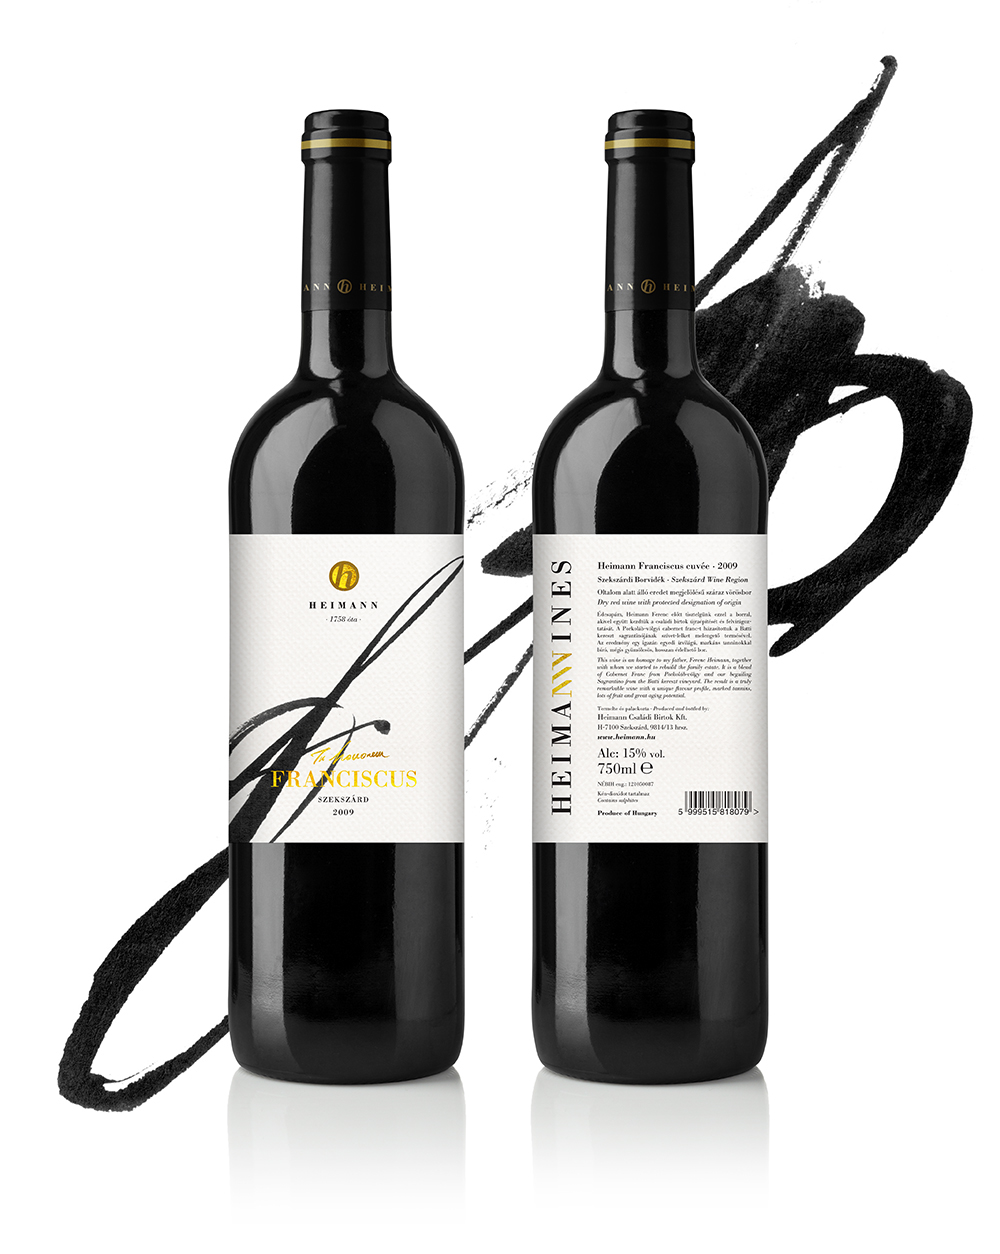 Heimann Wines szekszárd hungary bottle design wine winery label design top wines Bestof 2013 Simon Says José Simon birtokbor Franciscus